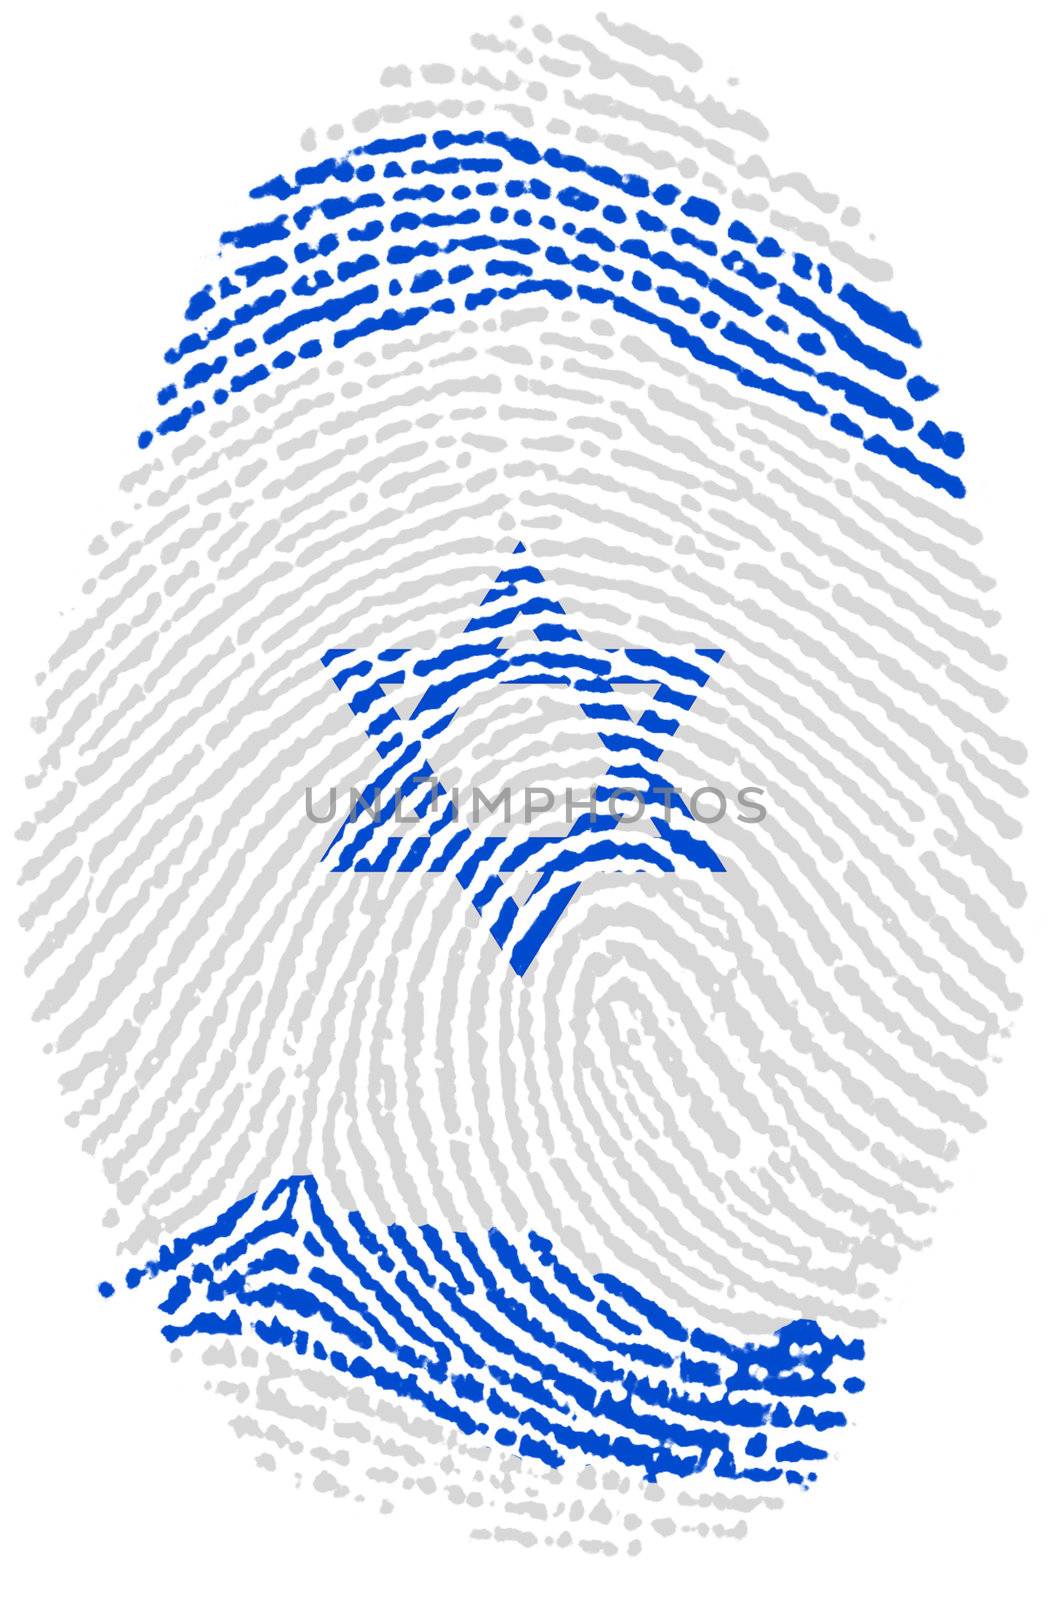 Israel Fingerprint passport by rigamondis